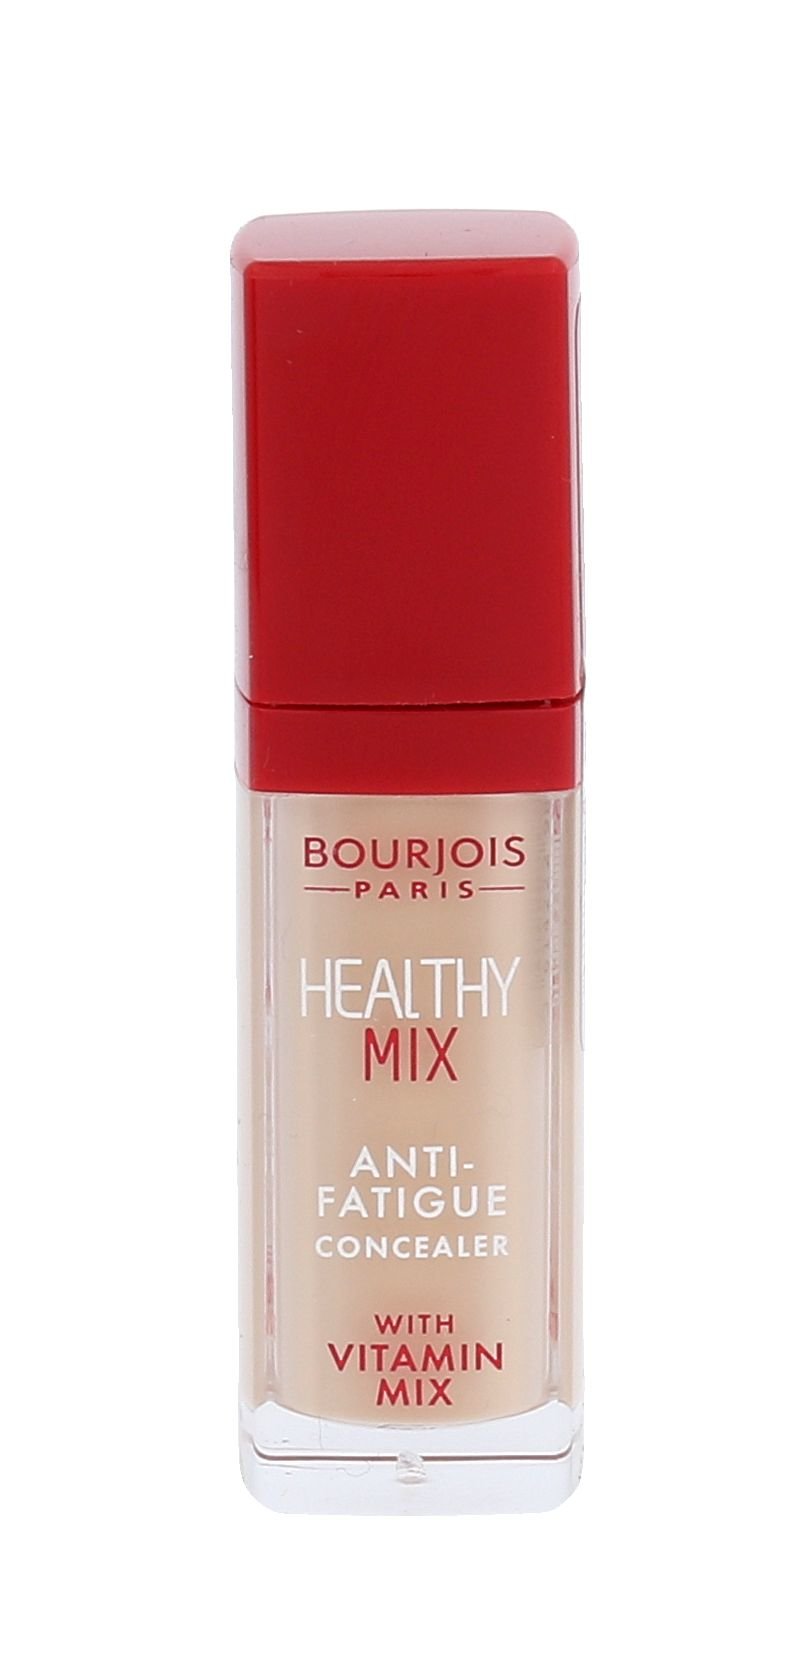 BOURJOIS Paris Healthy Mix Anti-Fatigue Concealer